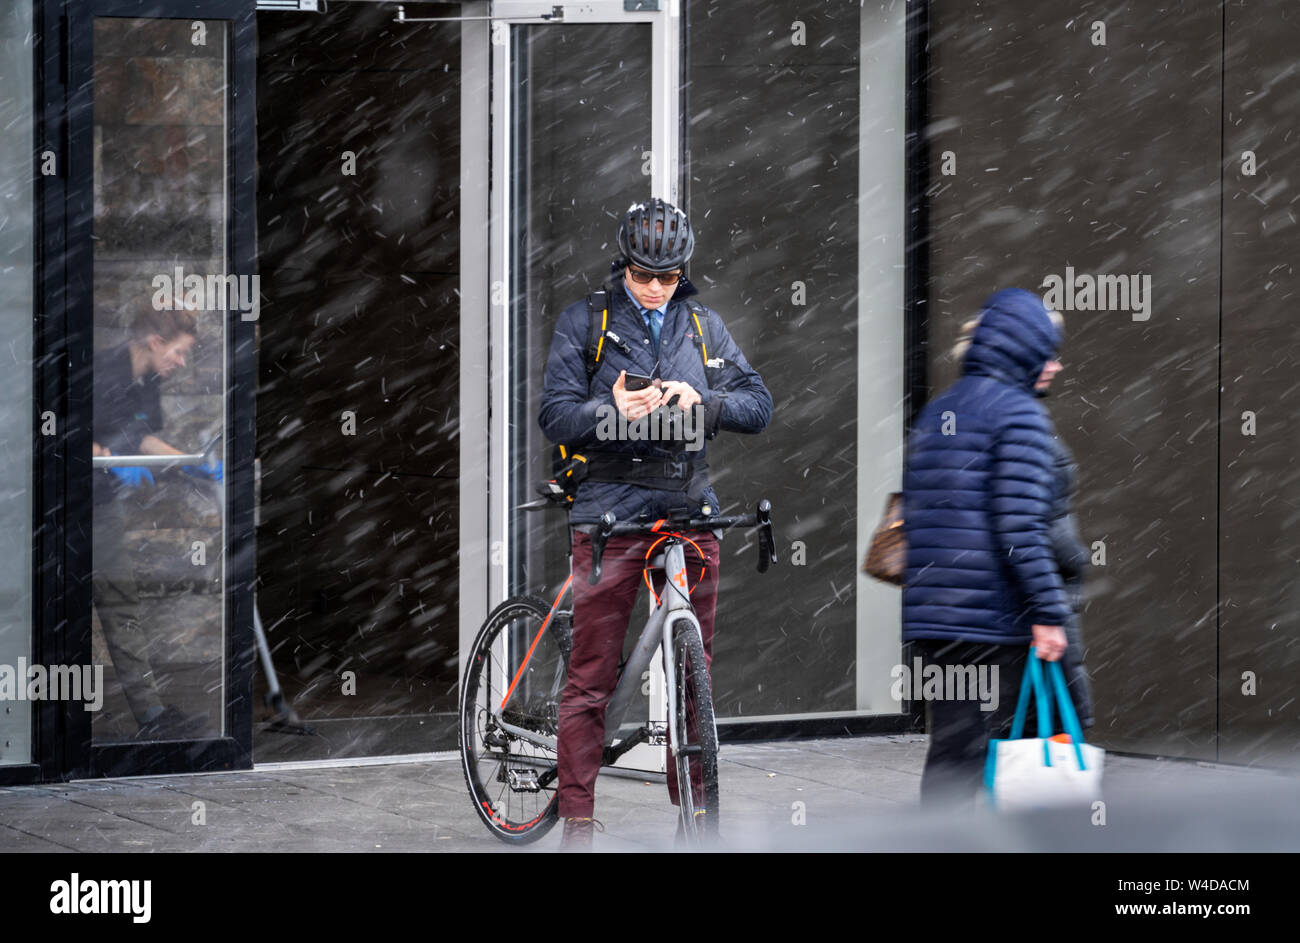 Snowing in Reykjavik, Iceland Stock Photo